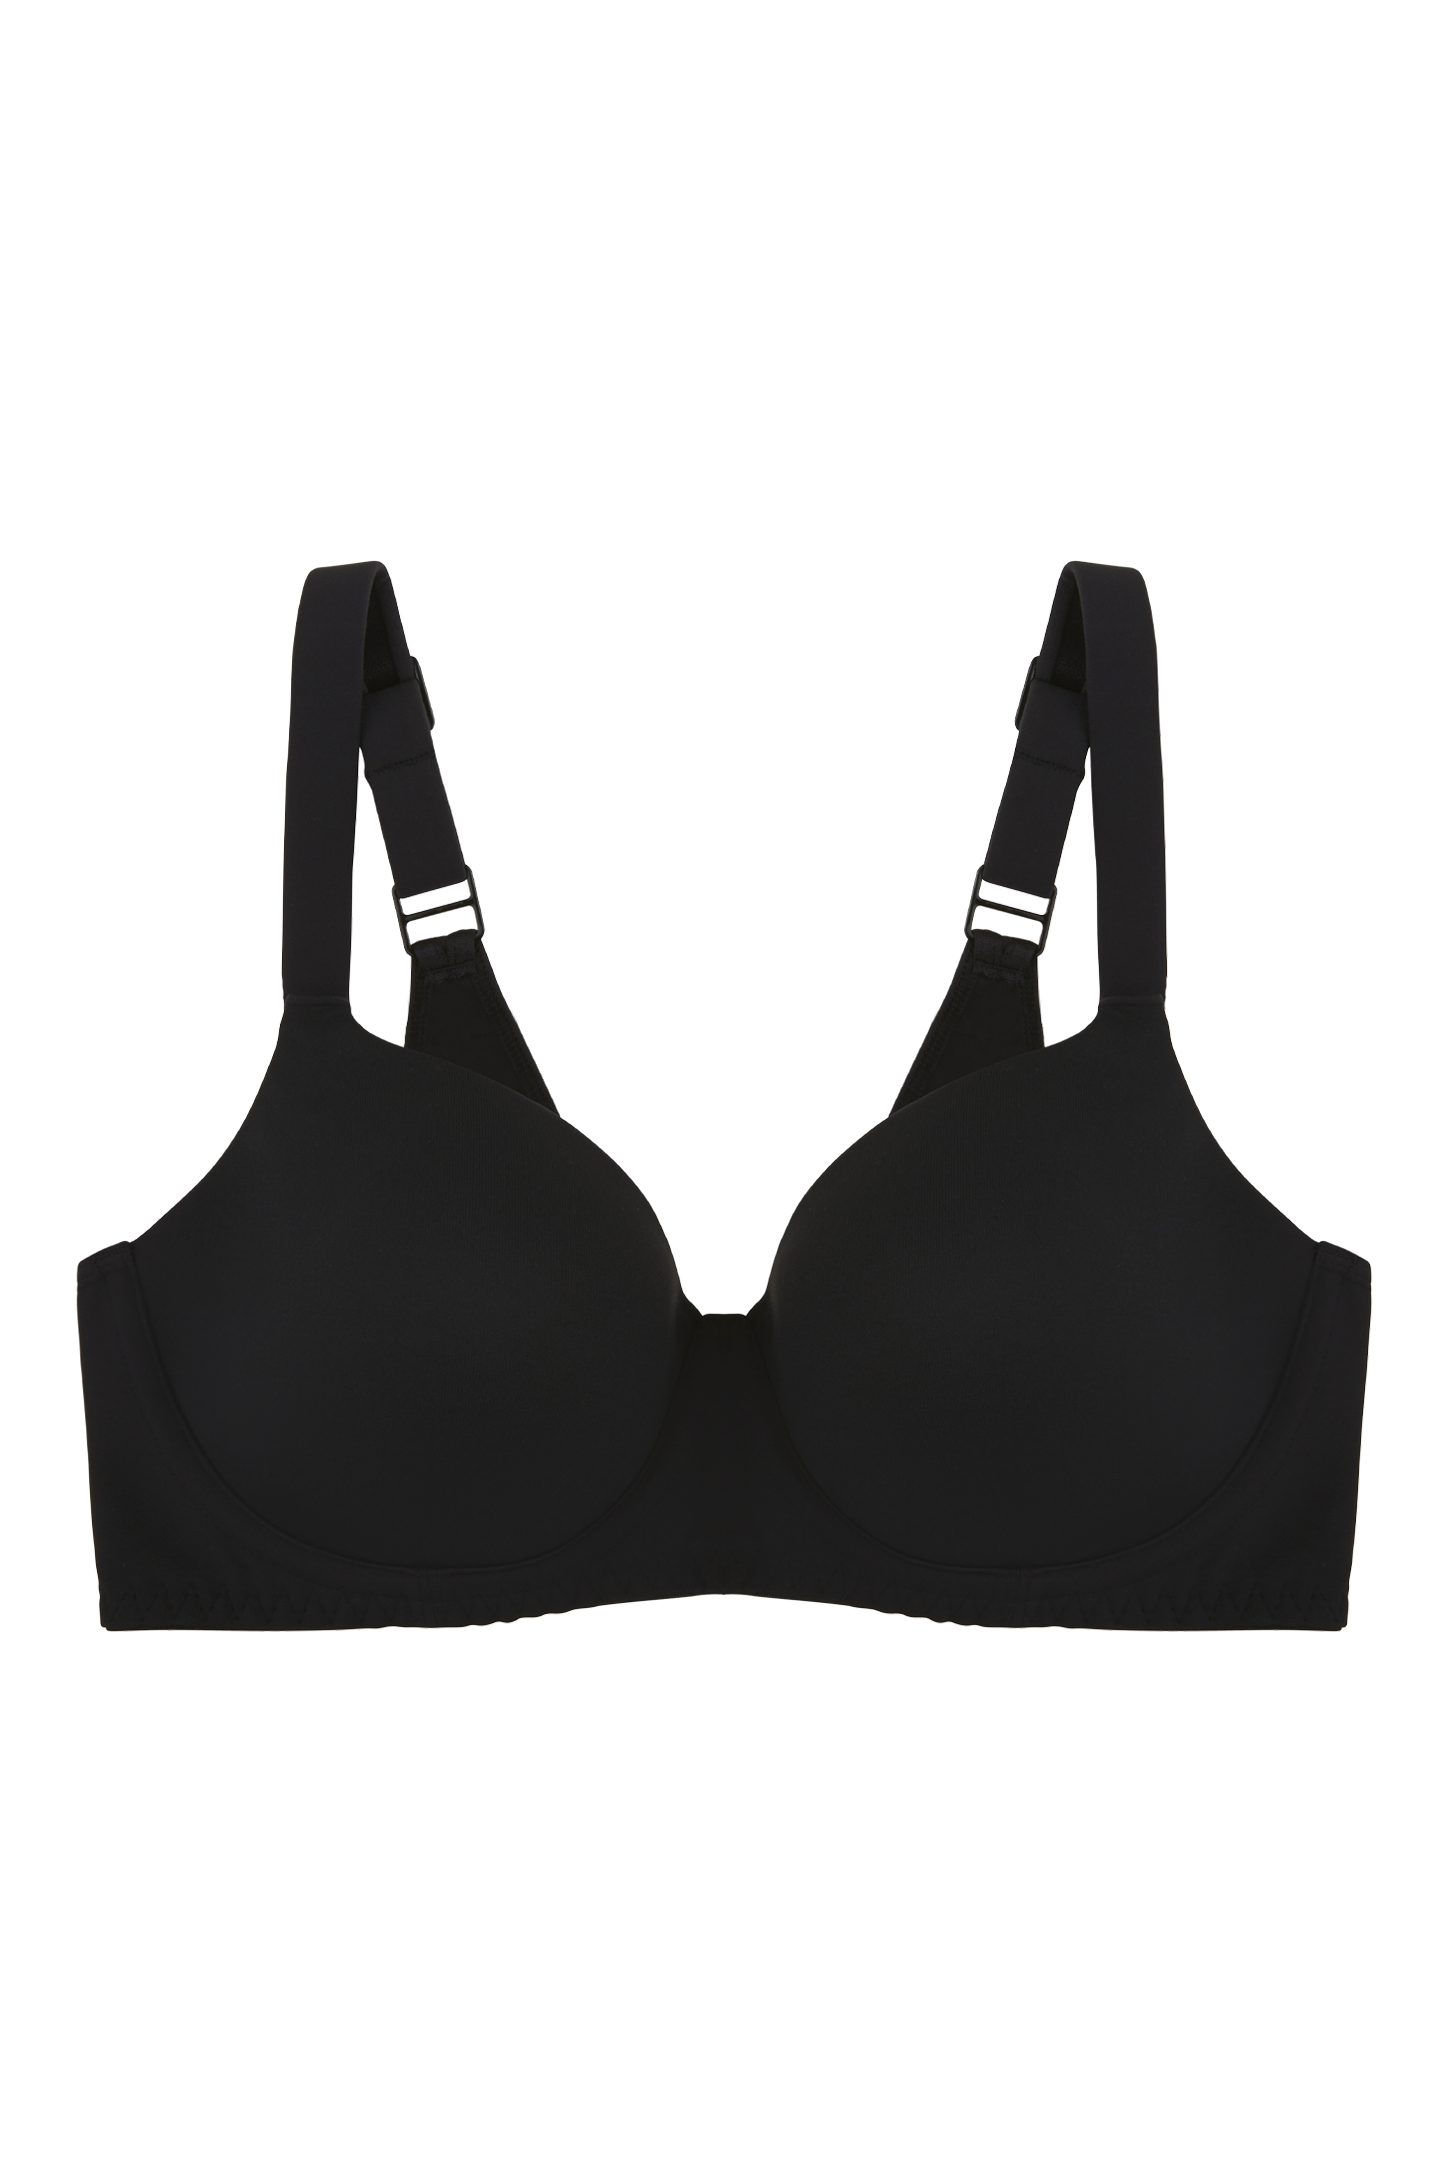 TQWQT Padded T Shirt Bras for Women Full-Coverage Wirefree Bra, Adjustable  Shoulder Straps Bra for Everyday Wear,Black 36B 